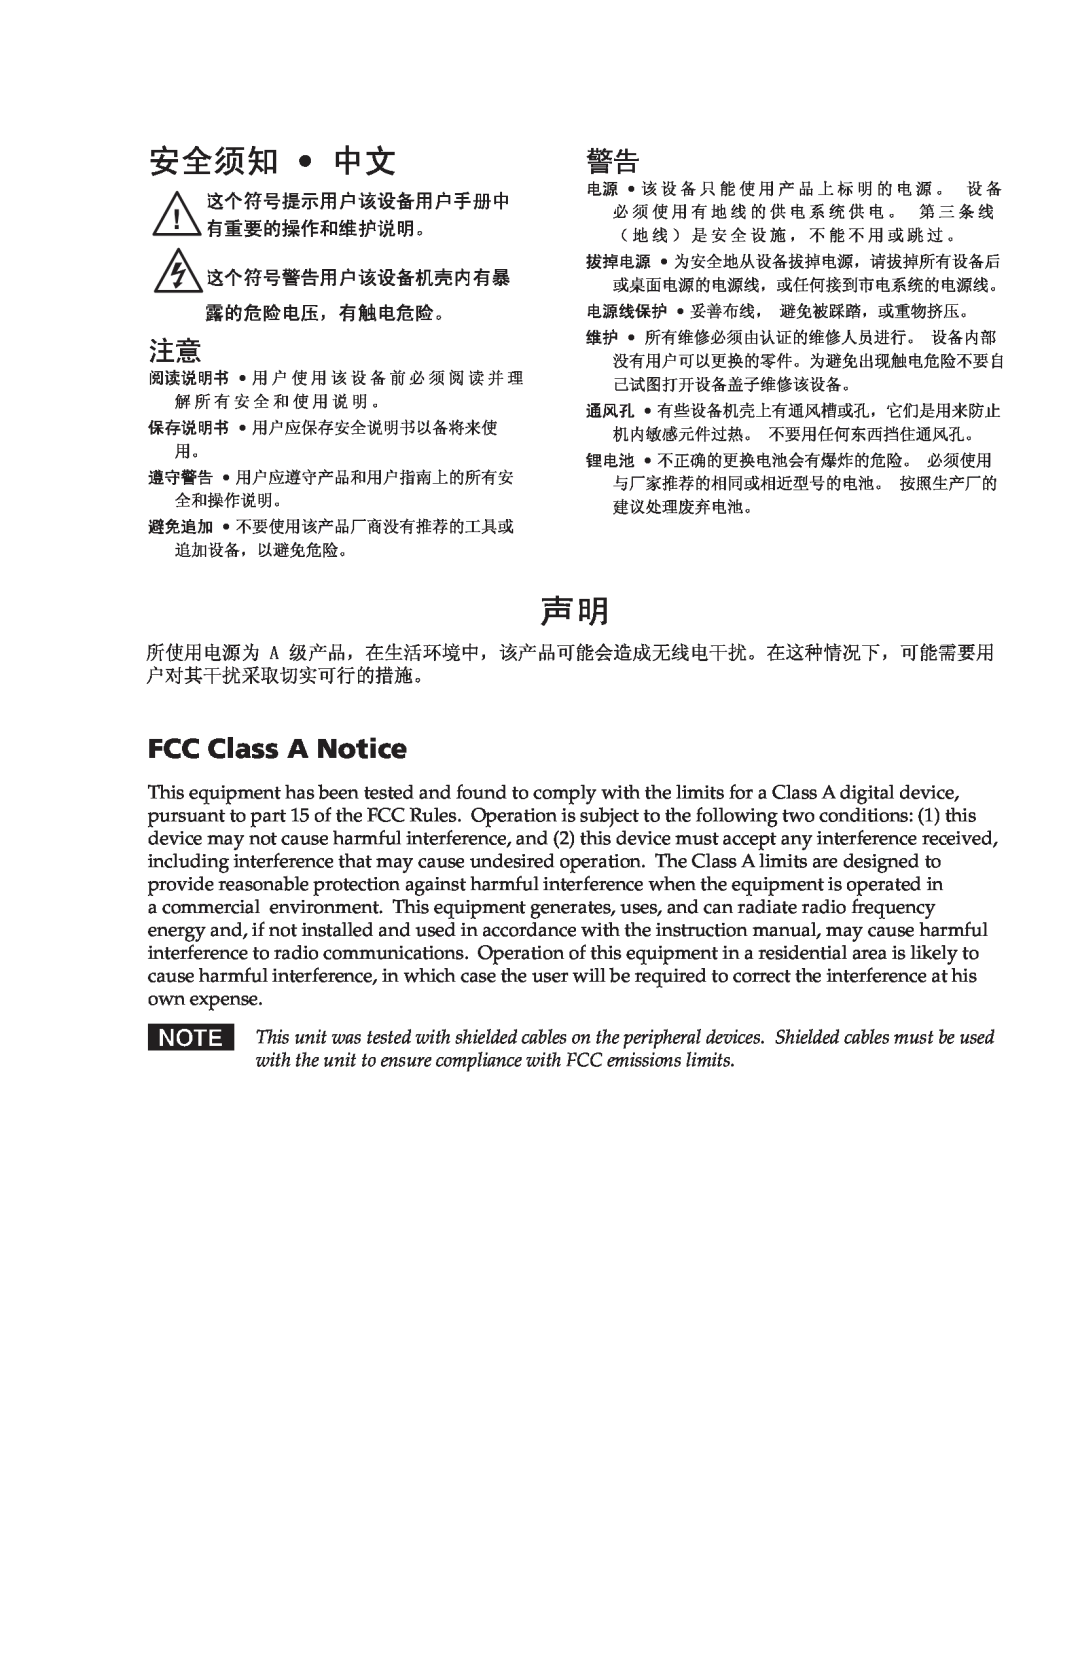 Extron electronic IPL T SF Series FCC Class A Notice, 安全须知 中文, 阅读说明书 用 户 使 用 该 设 备 前 必 须 阅 读 并 理 解 所 有 安 全 和 使 用 说 明 。 